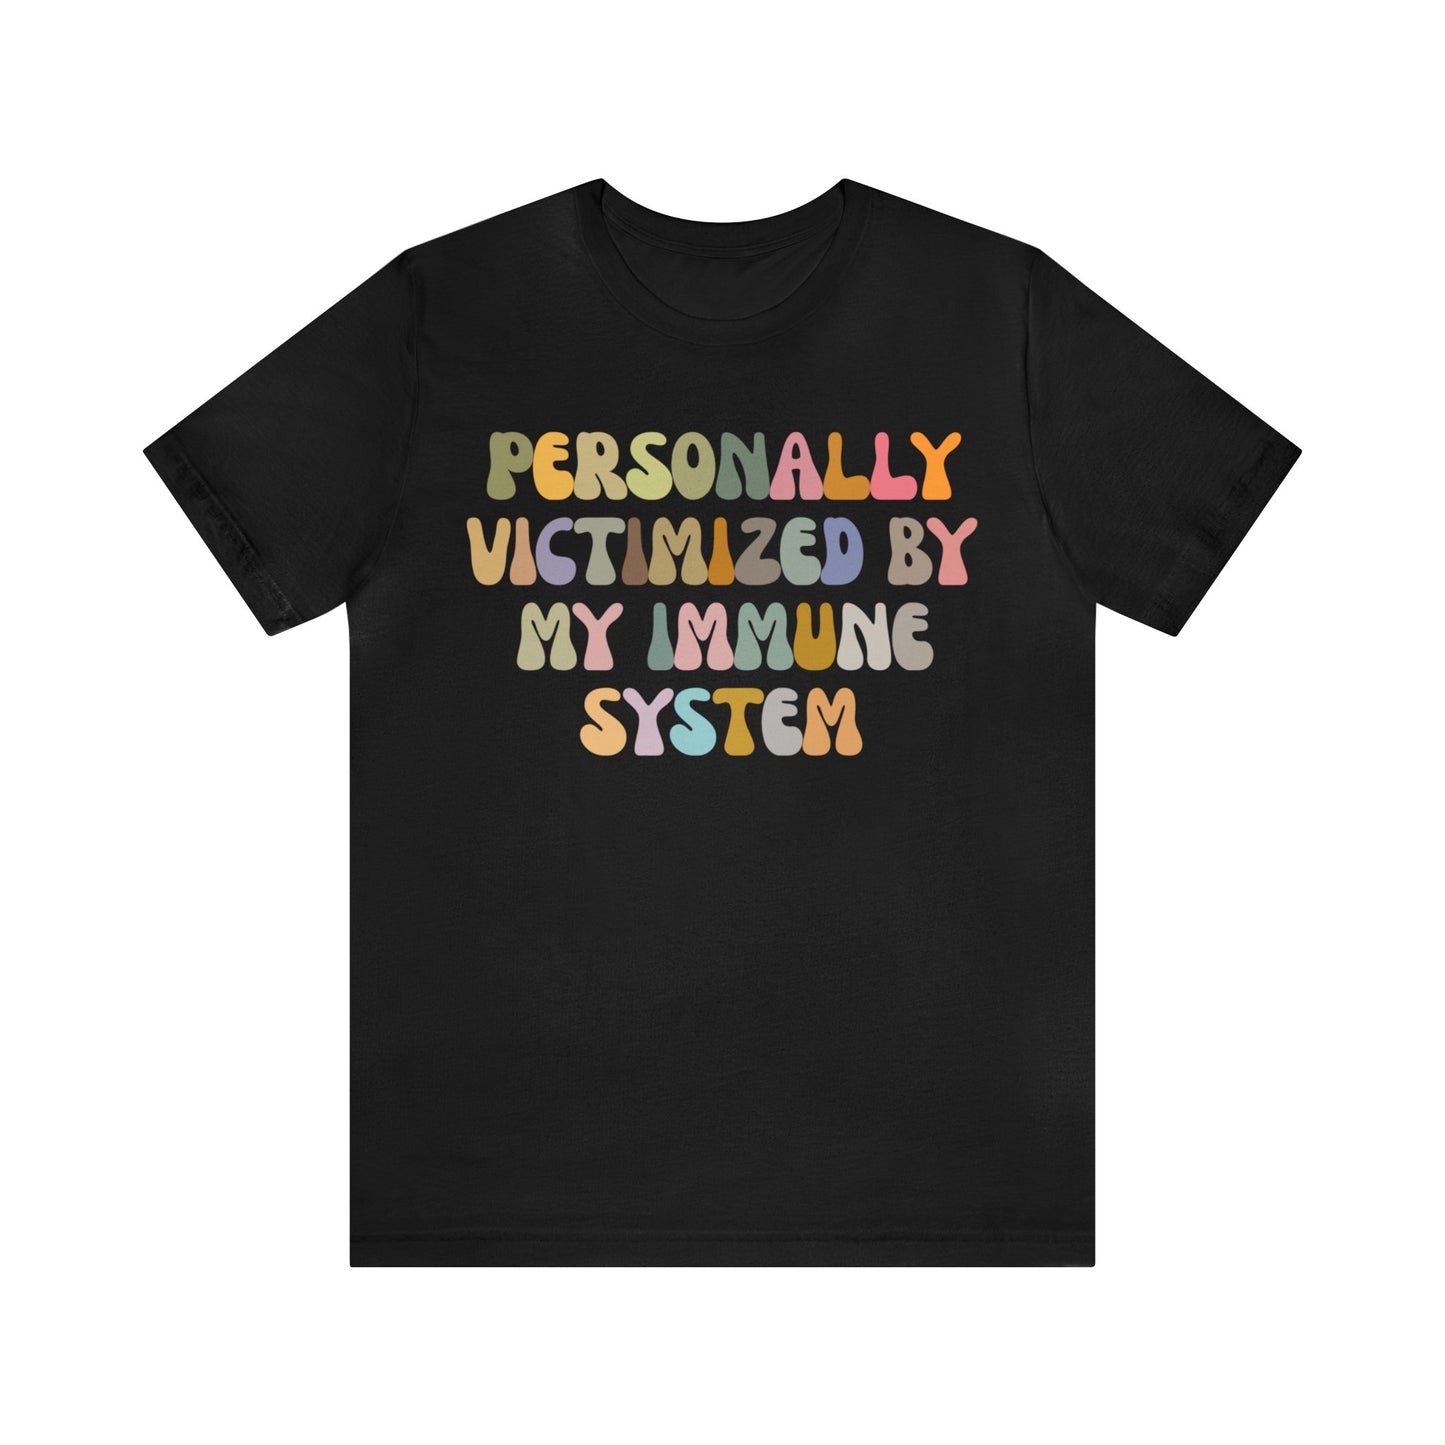 Personally Victimized By My Immune System Shirt, Autoimmune Disease Awareness Shirt, Shirt for Autoimmune Warriors, Women Funny Shirt, T1474